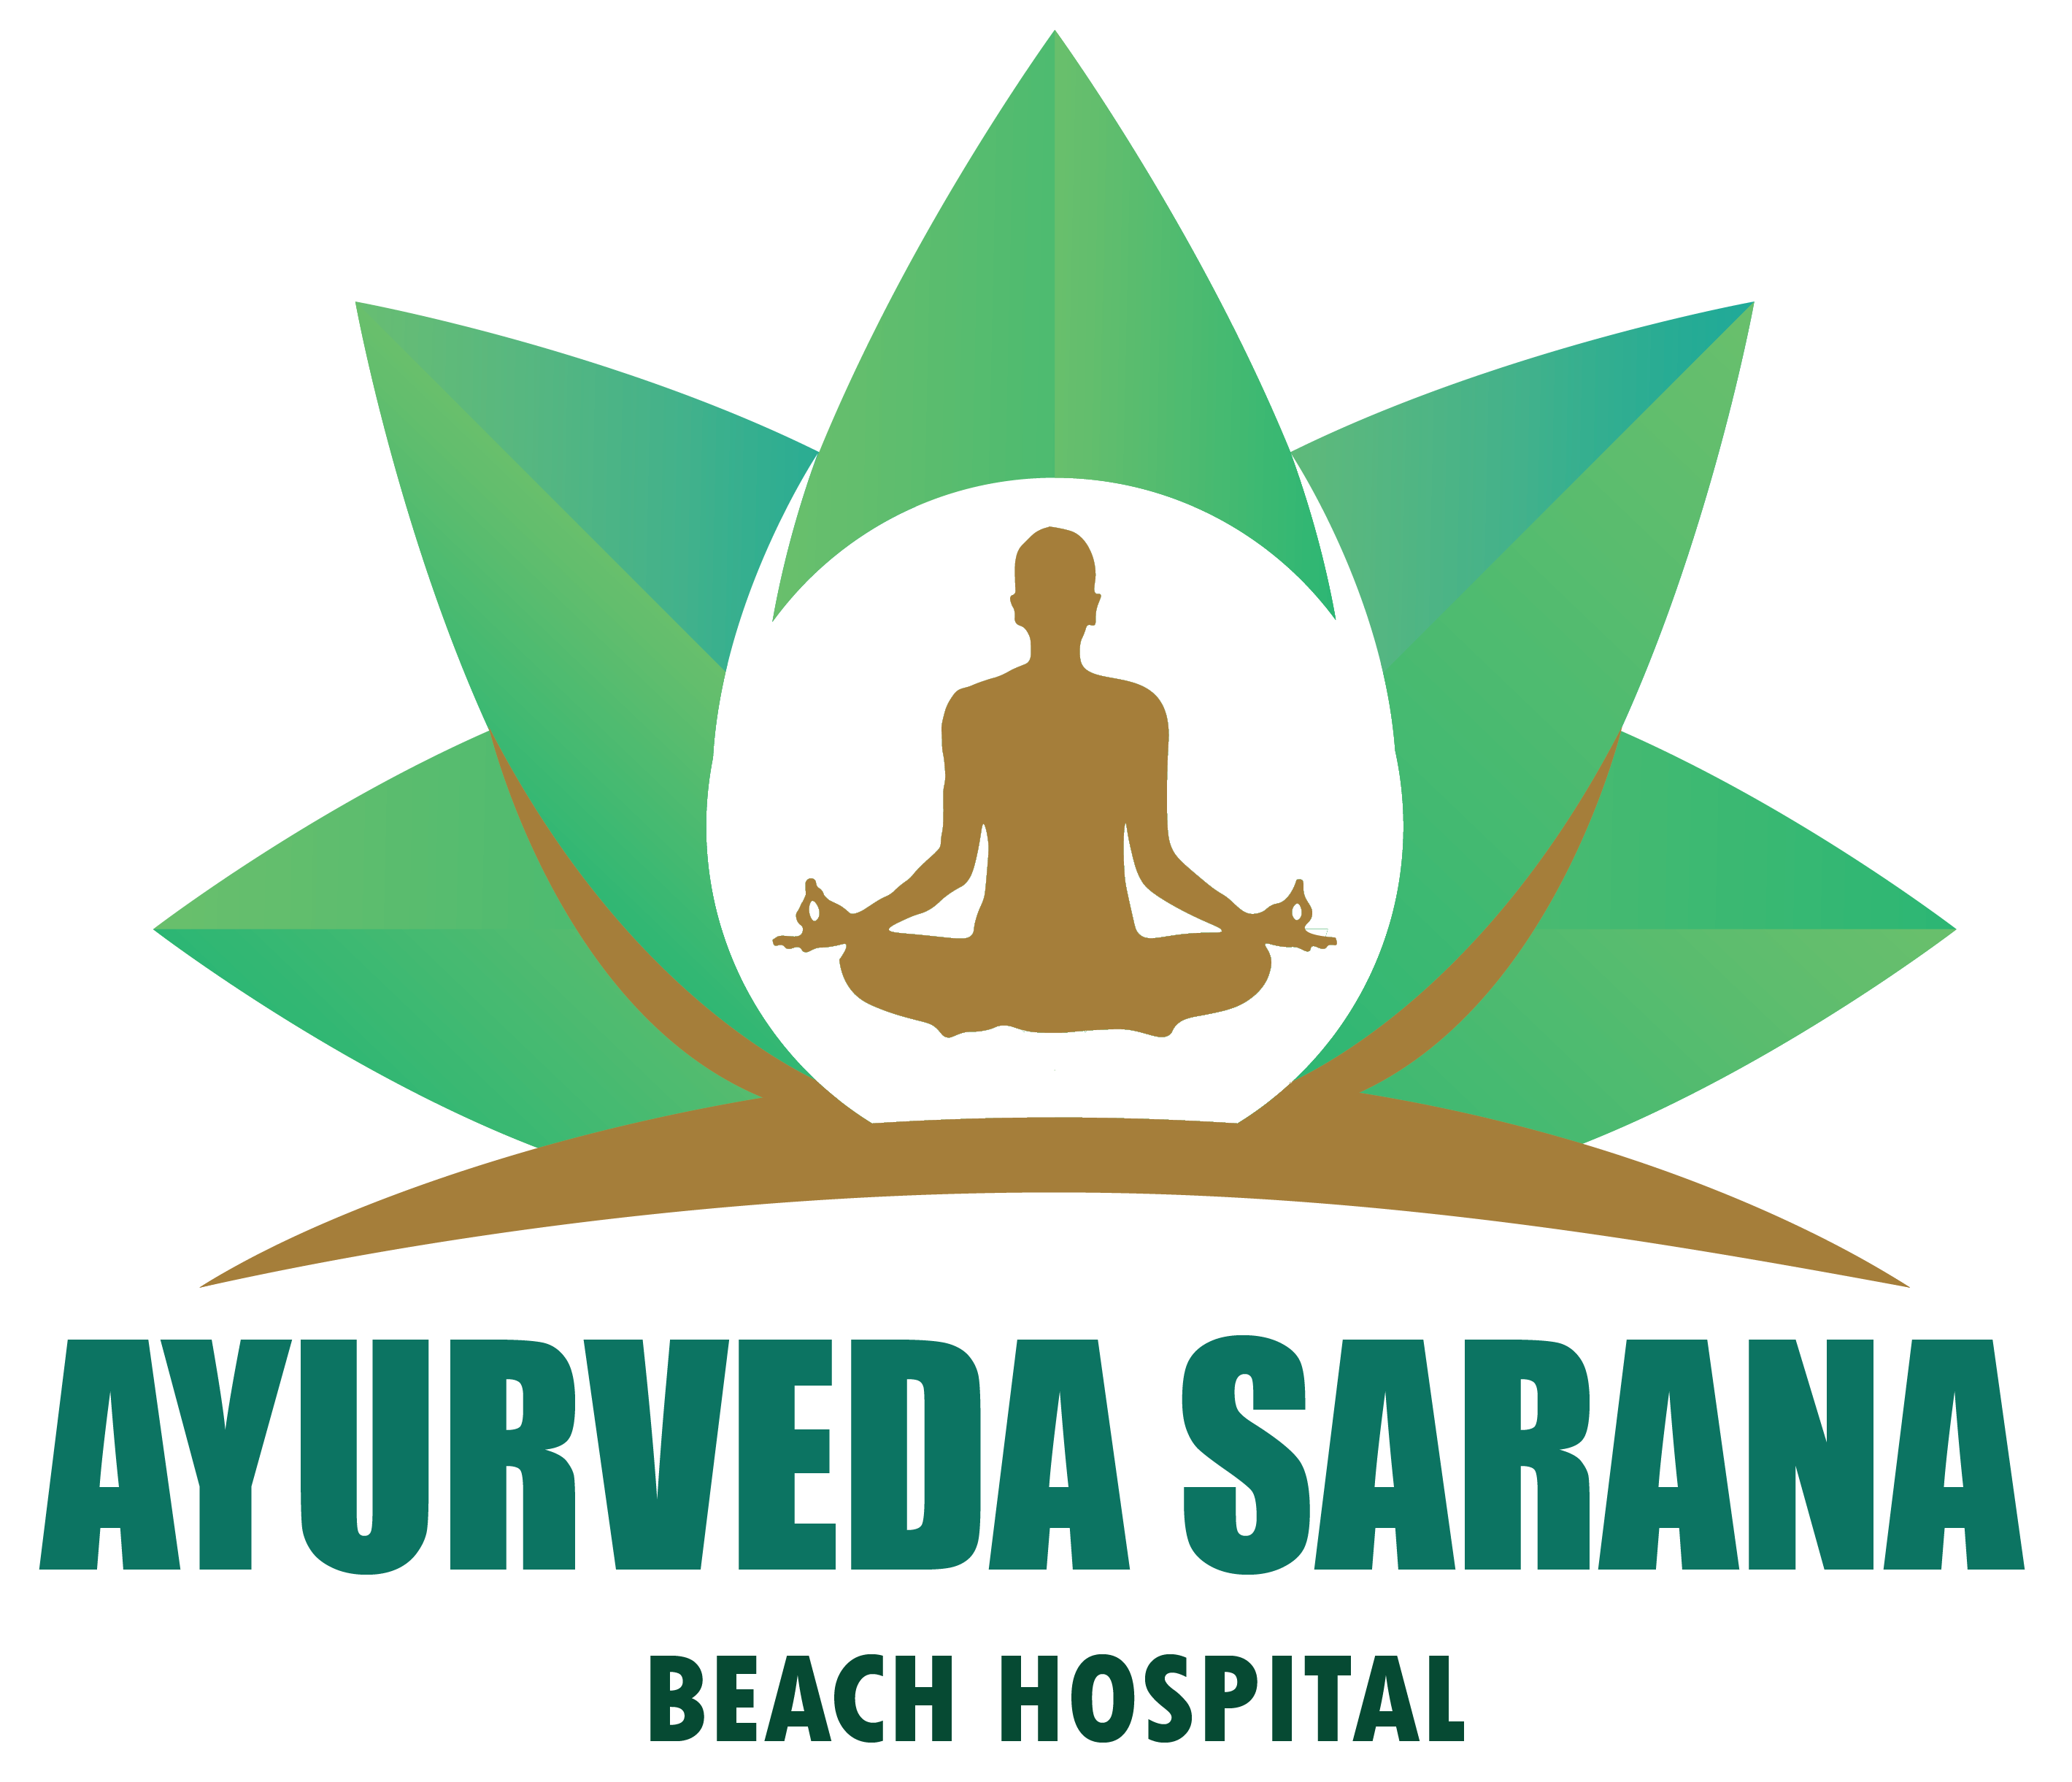 Ayurveda Sarana Beach Hospital